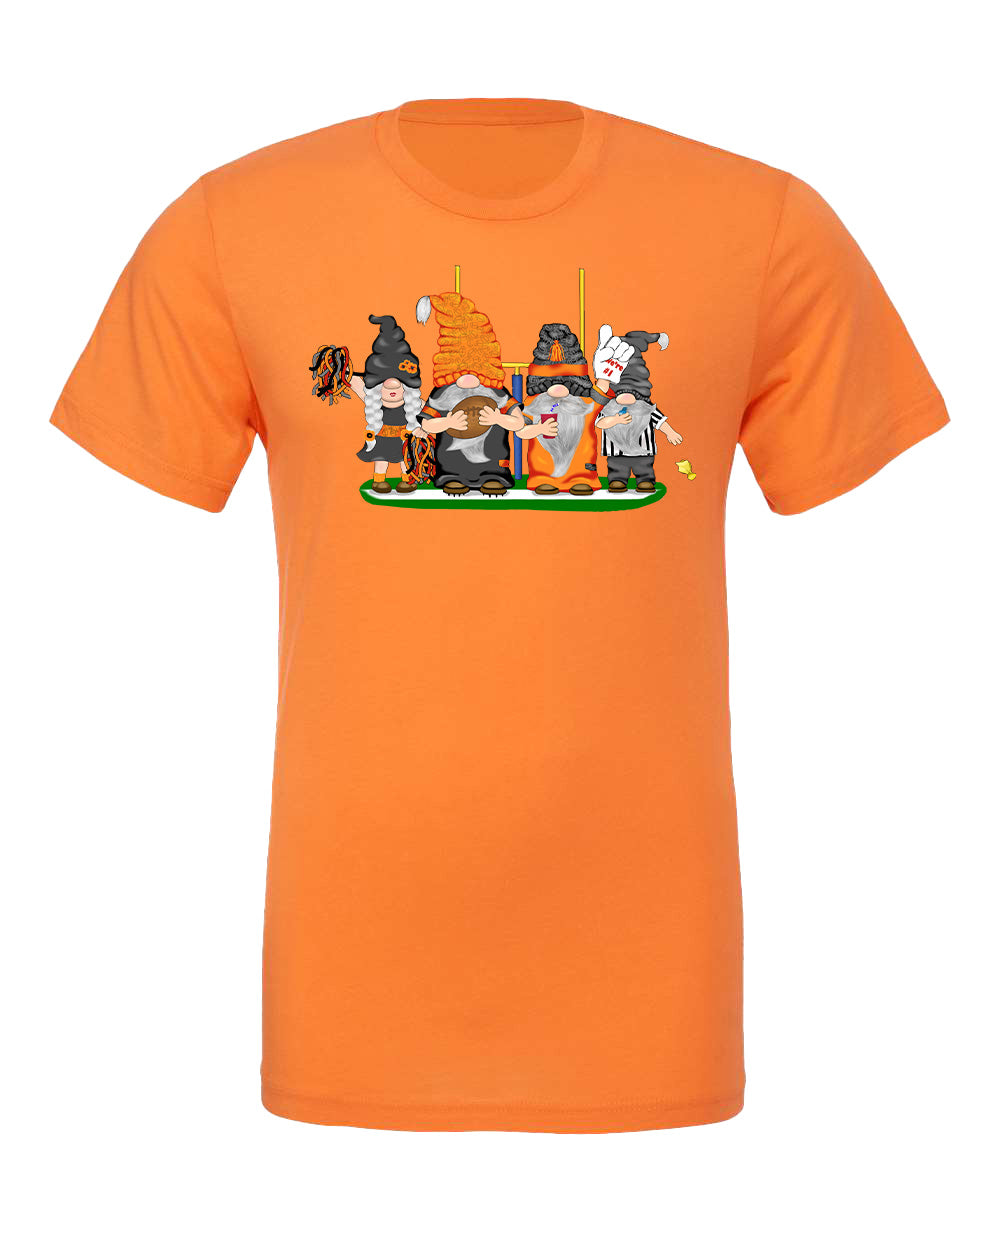 Black & Orange Football Gnomes on Men's T-shirt (similar to Cincinnati)